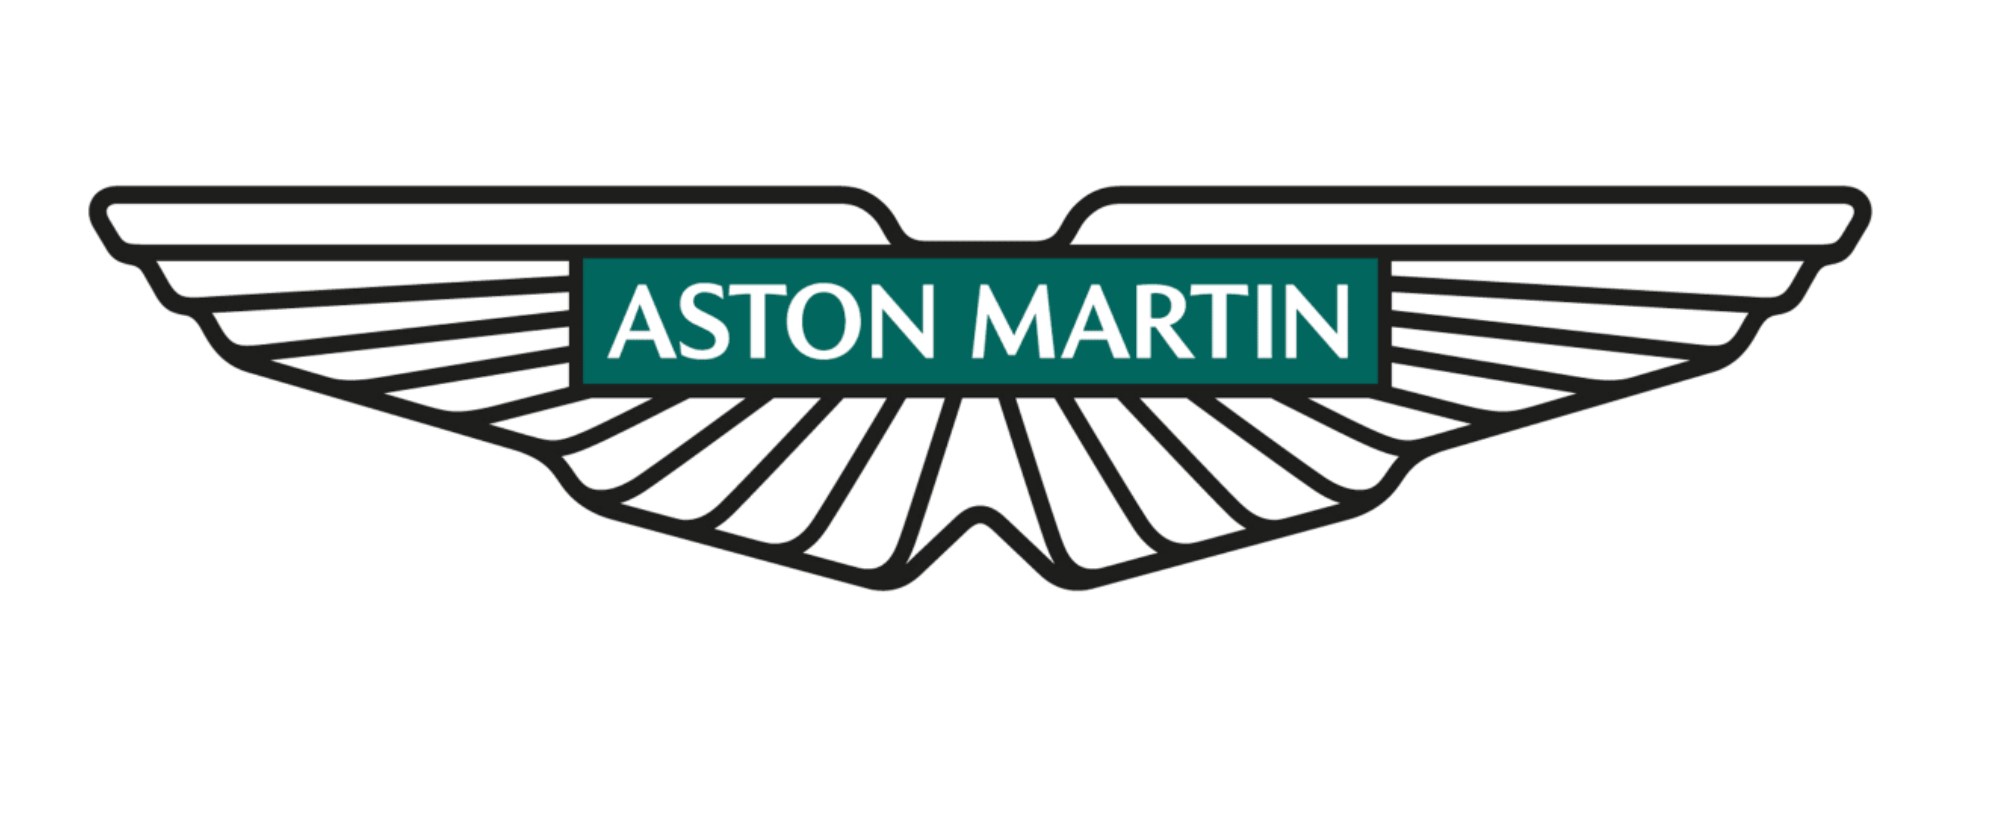 Aston Martin 2022 new badge logo 2